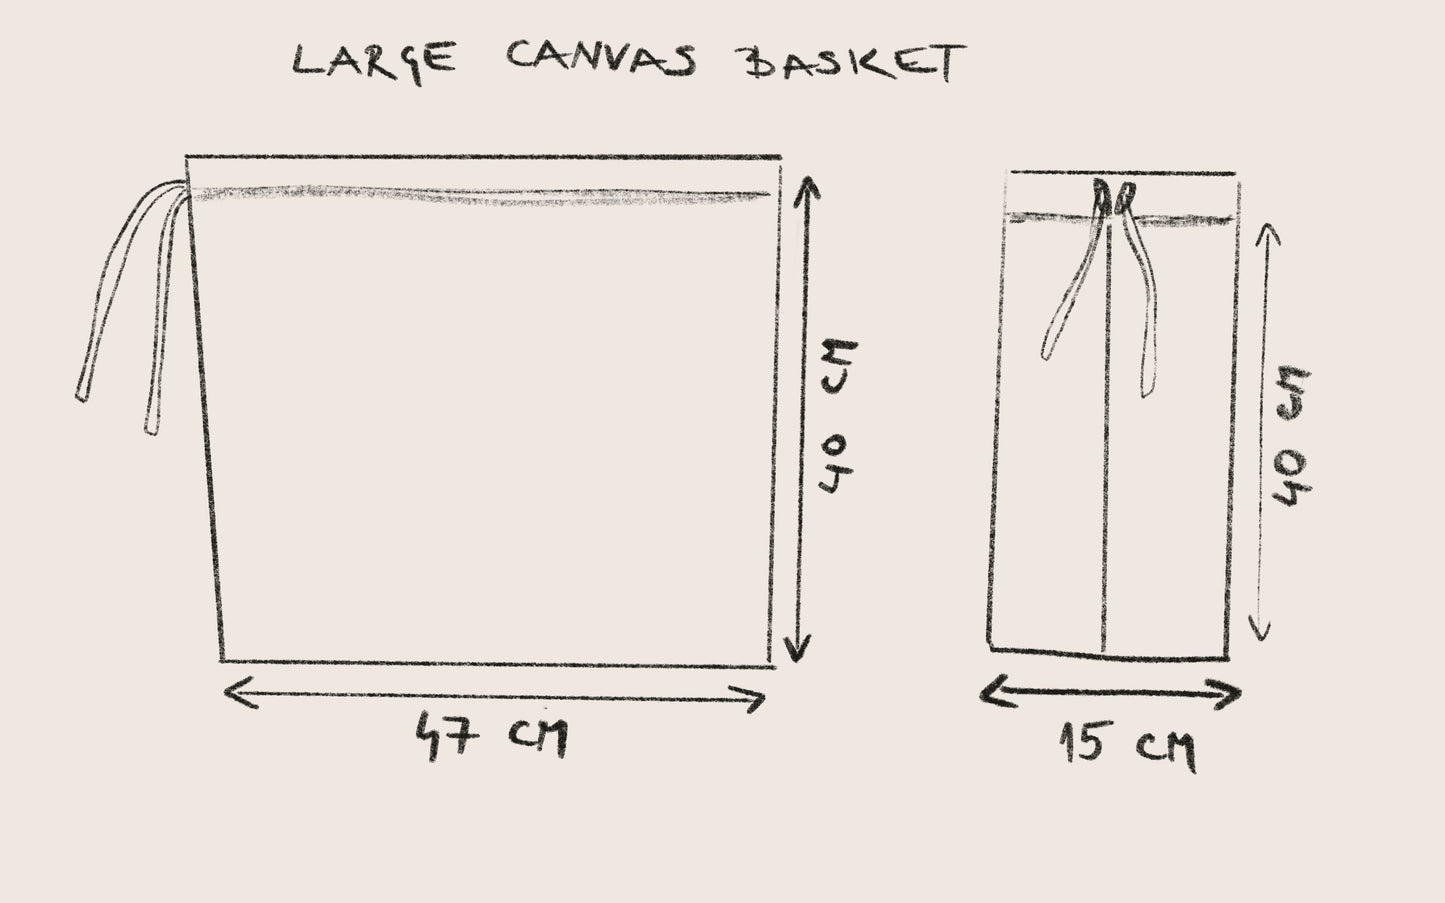 Large canvas storage basket - Lines